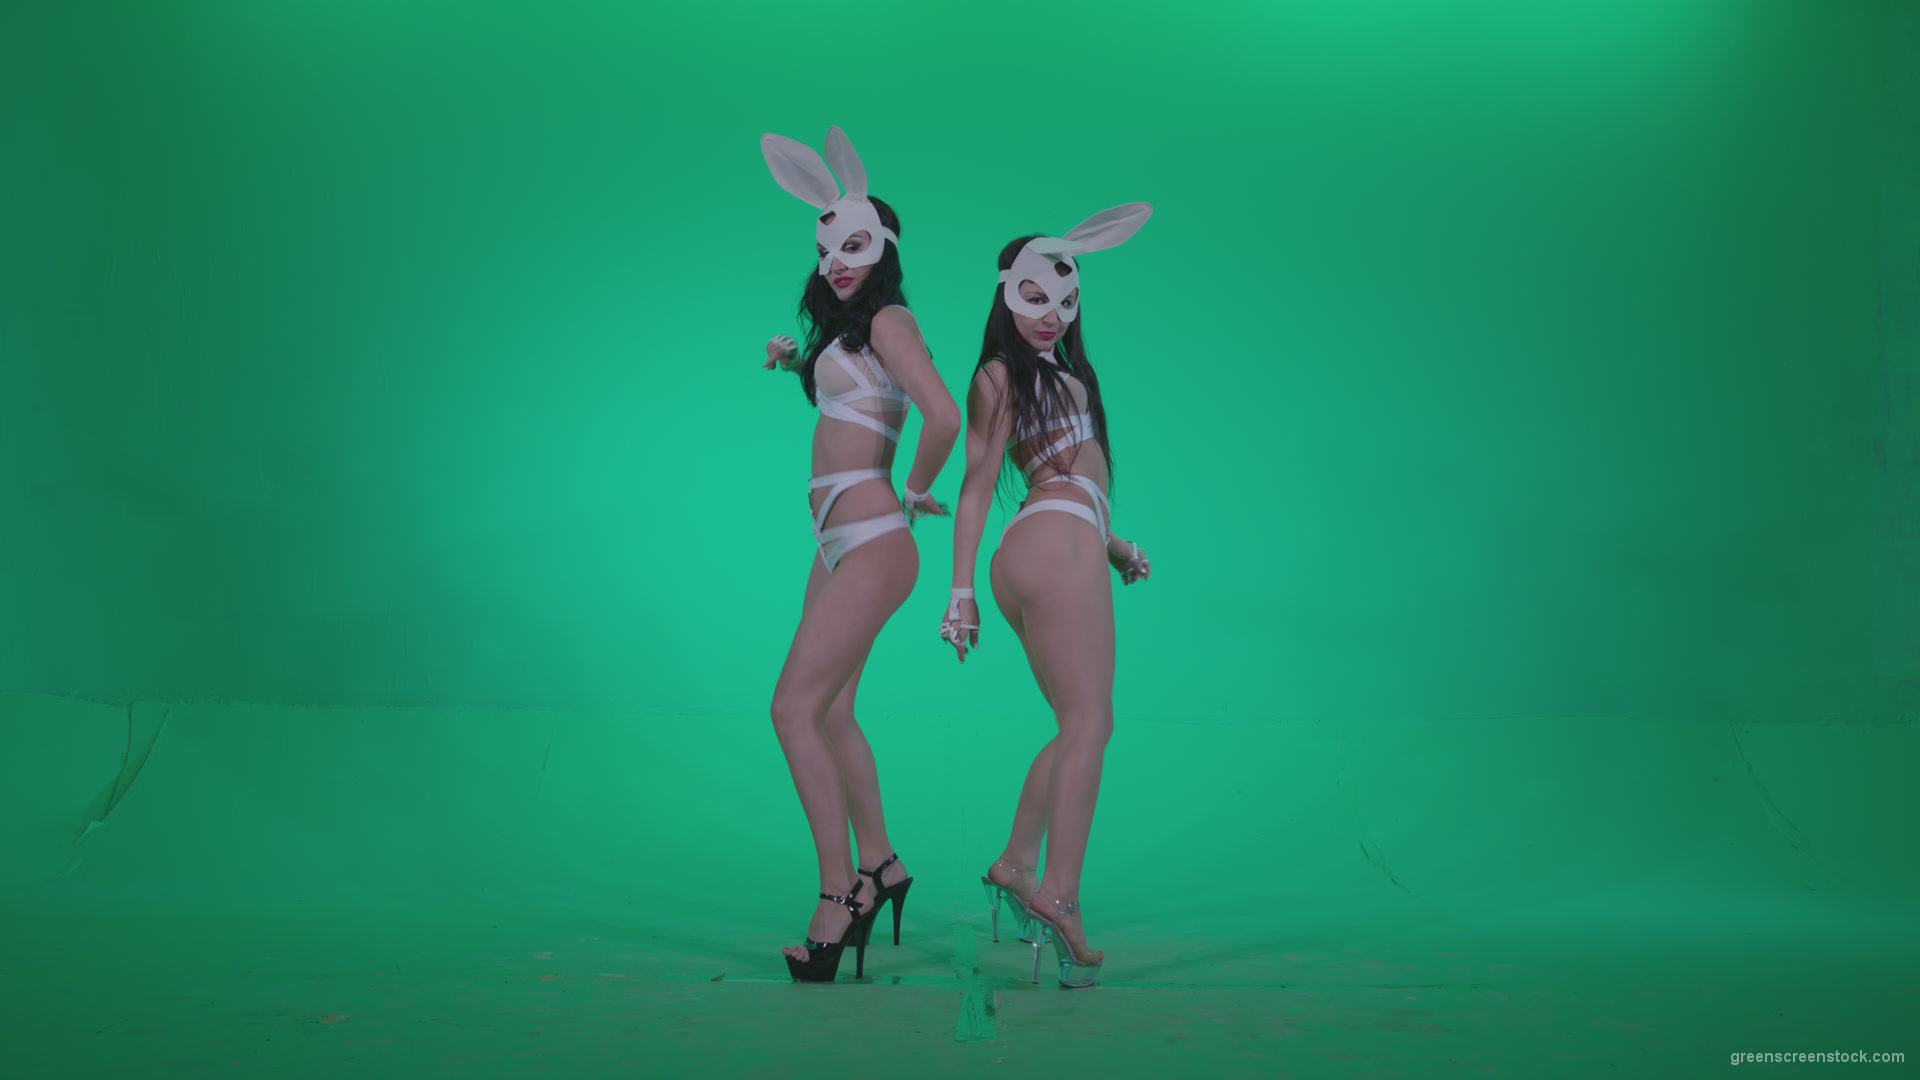 Go-go-Dancer-White-Rabbit-m5-Green-Screen-Video-Footage_005 Green Screen Stock